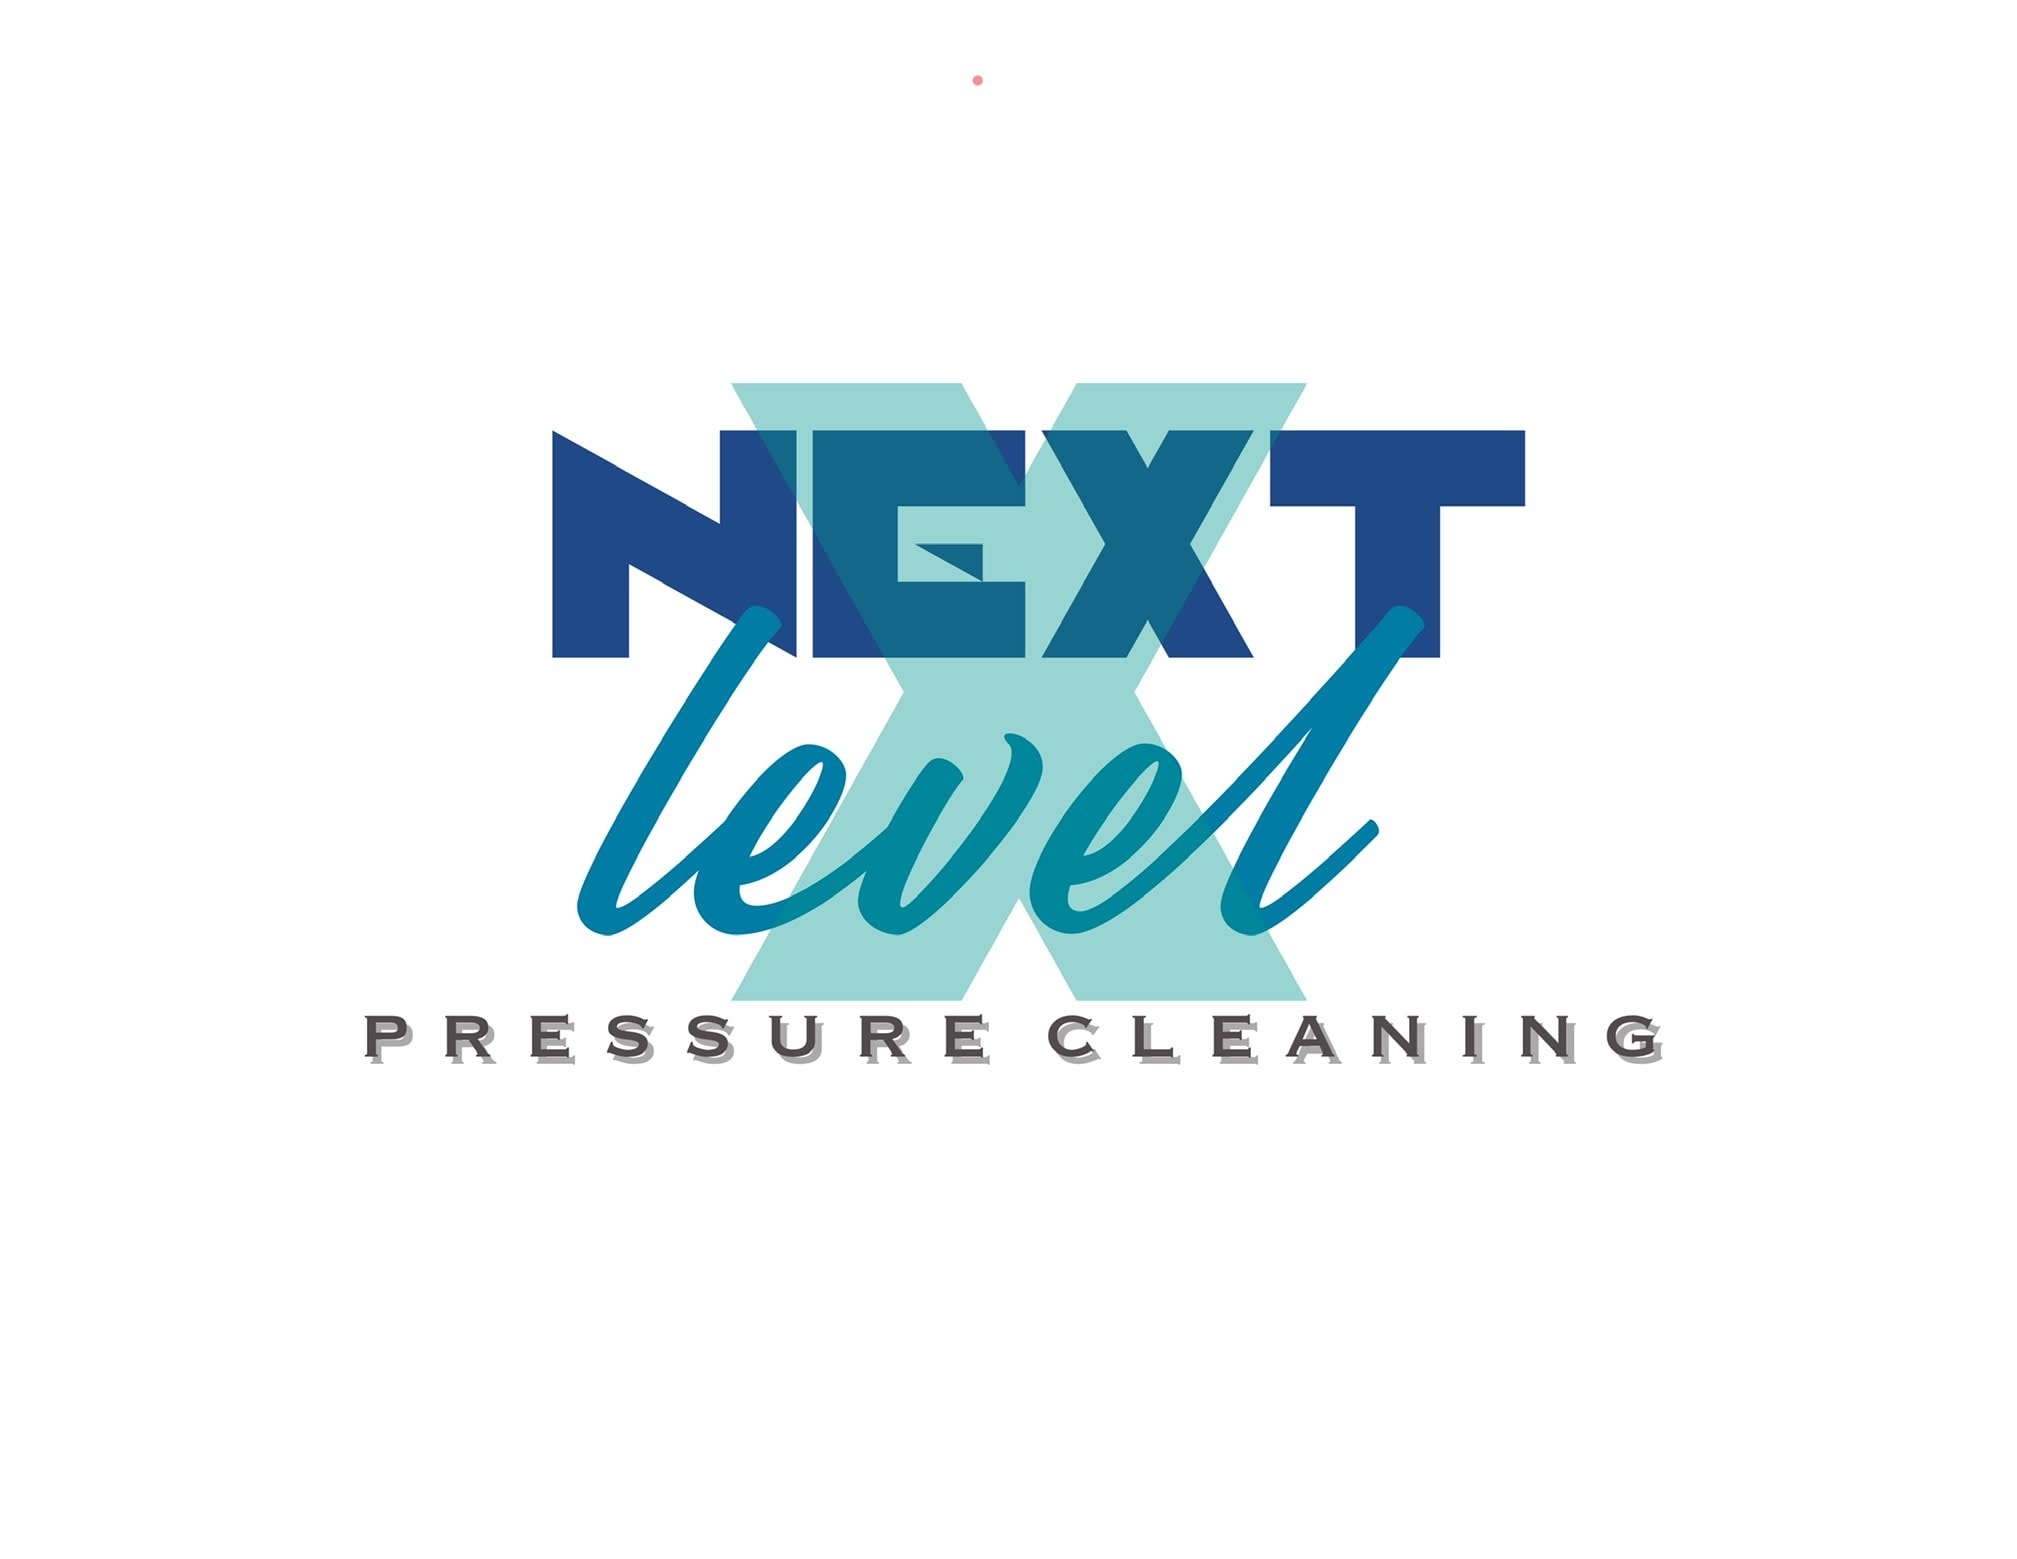 Nexxt Level Pressure Cleaning, LLC